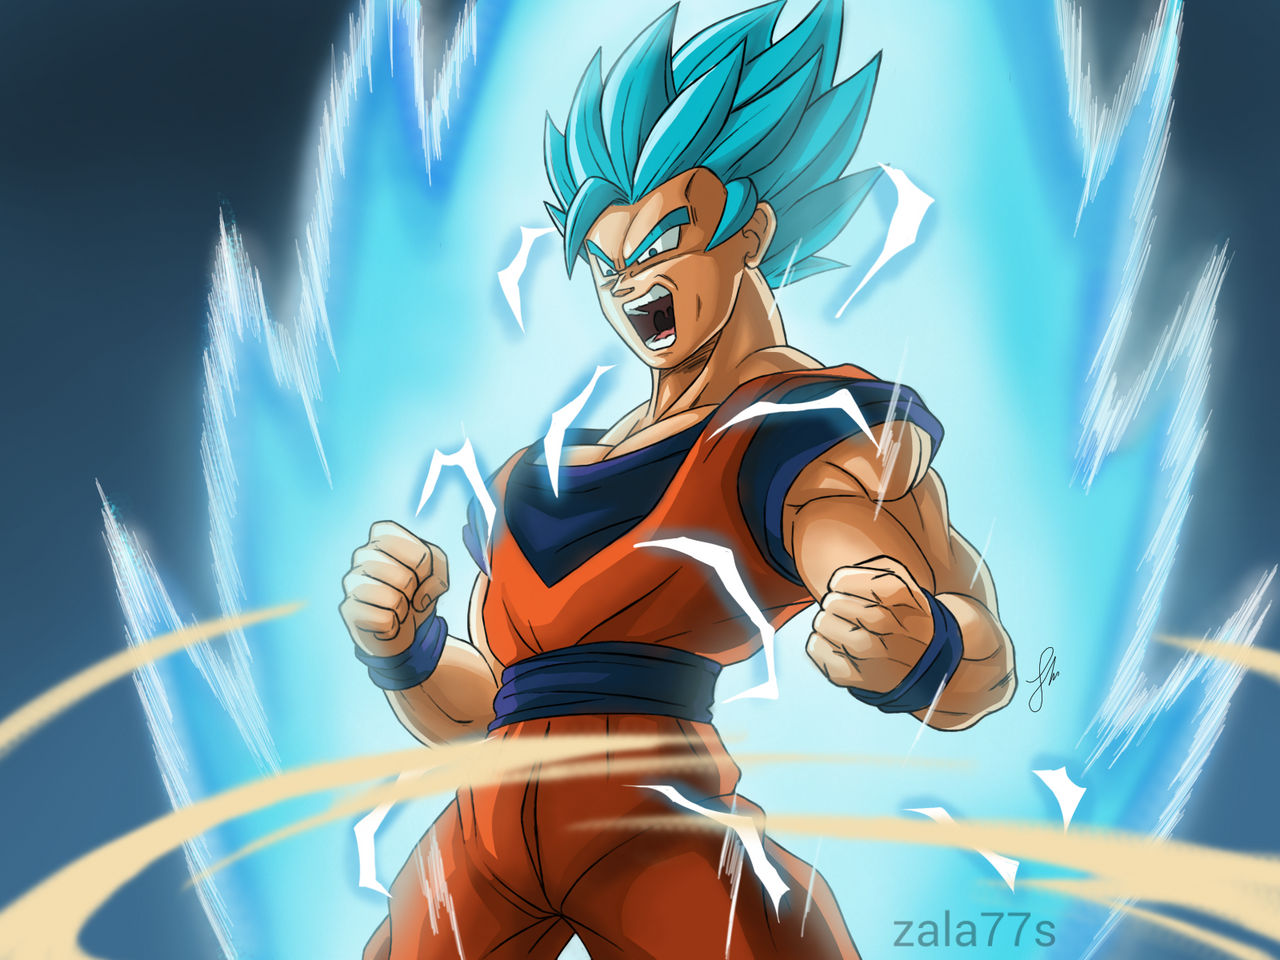 Goku SSJ Blue Full Power by Cholo15ART on DeviantArt